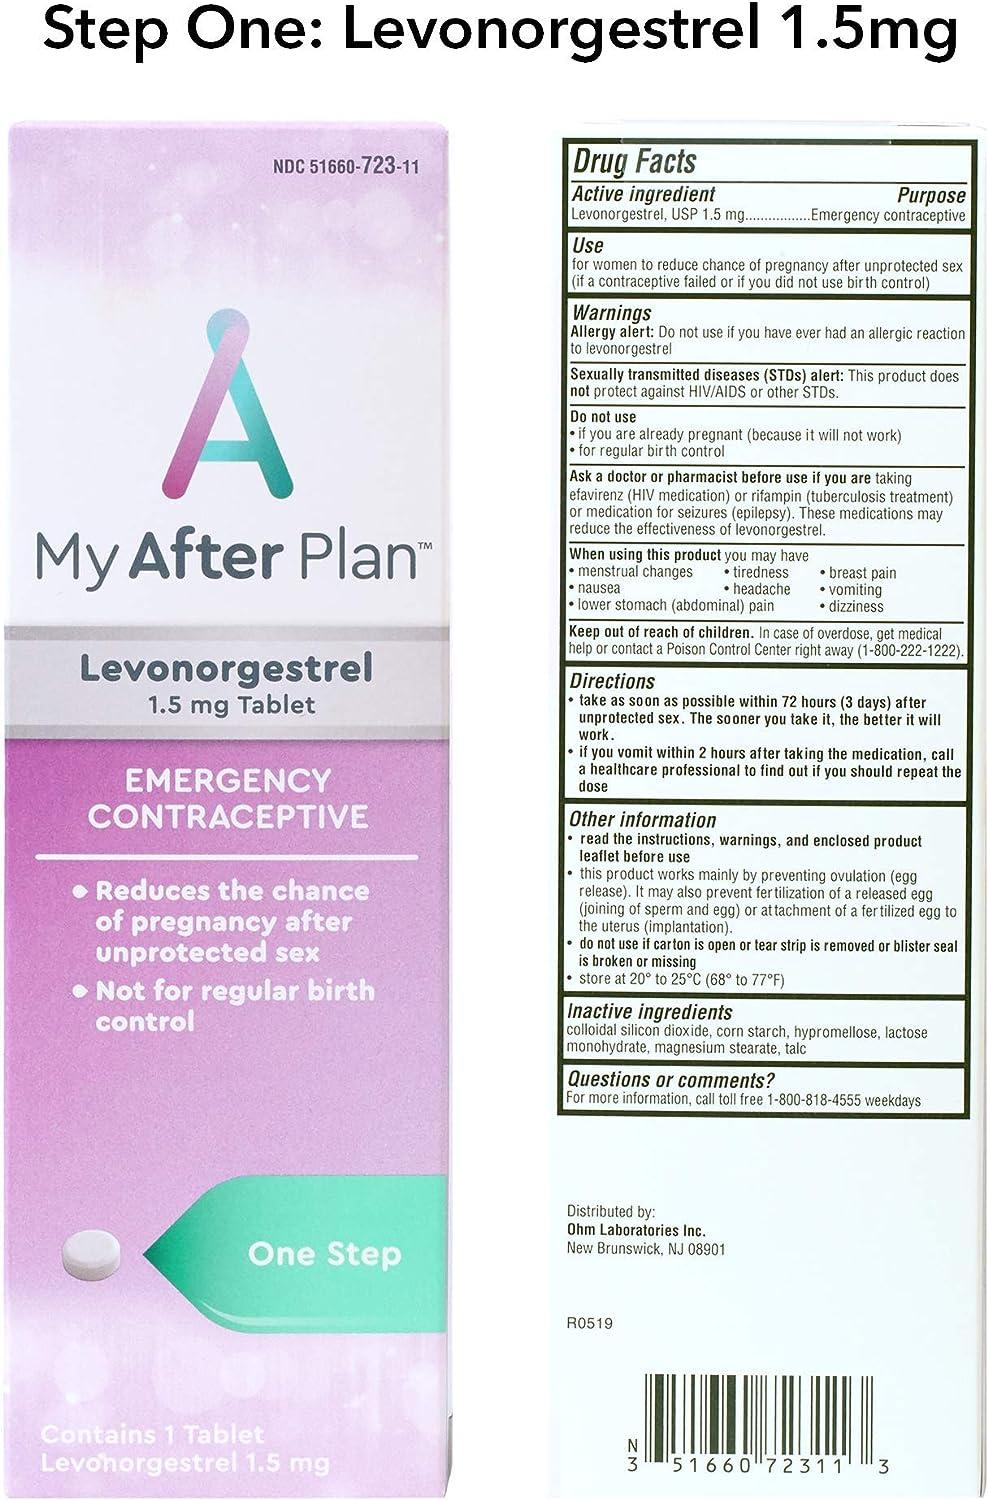 Plan B One-Step Emergency Contraceptive, 1.5 Mg 1 Egypt